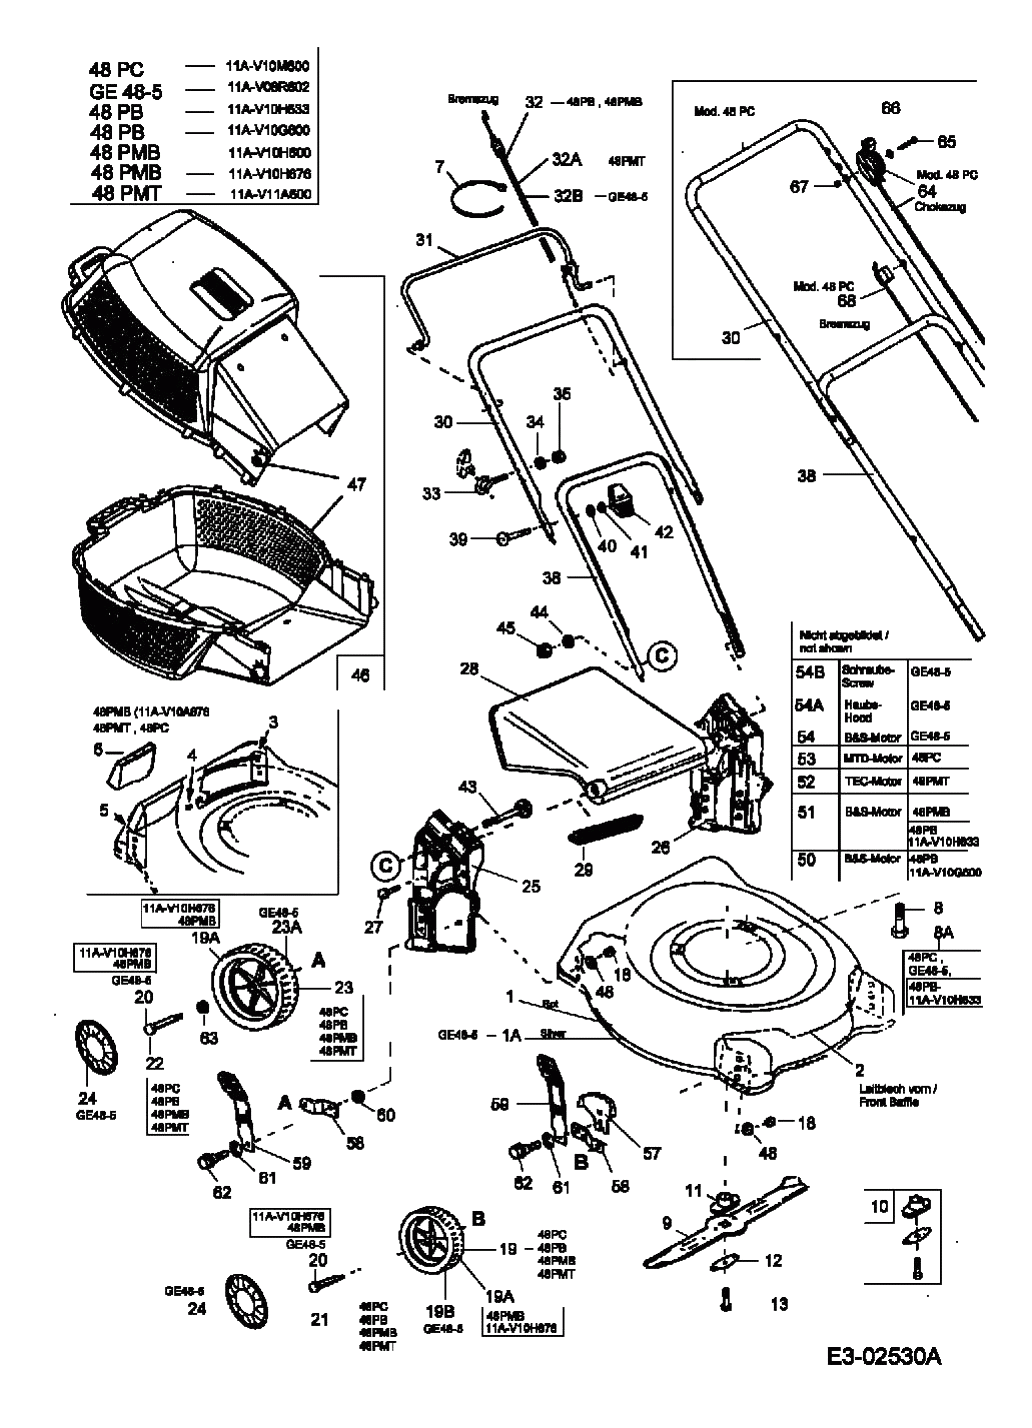 MTD Артикул 11A-V08R602 (год выпуска 2005). Основная деталировка